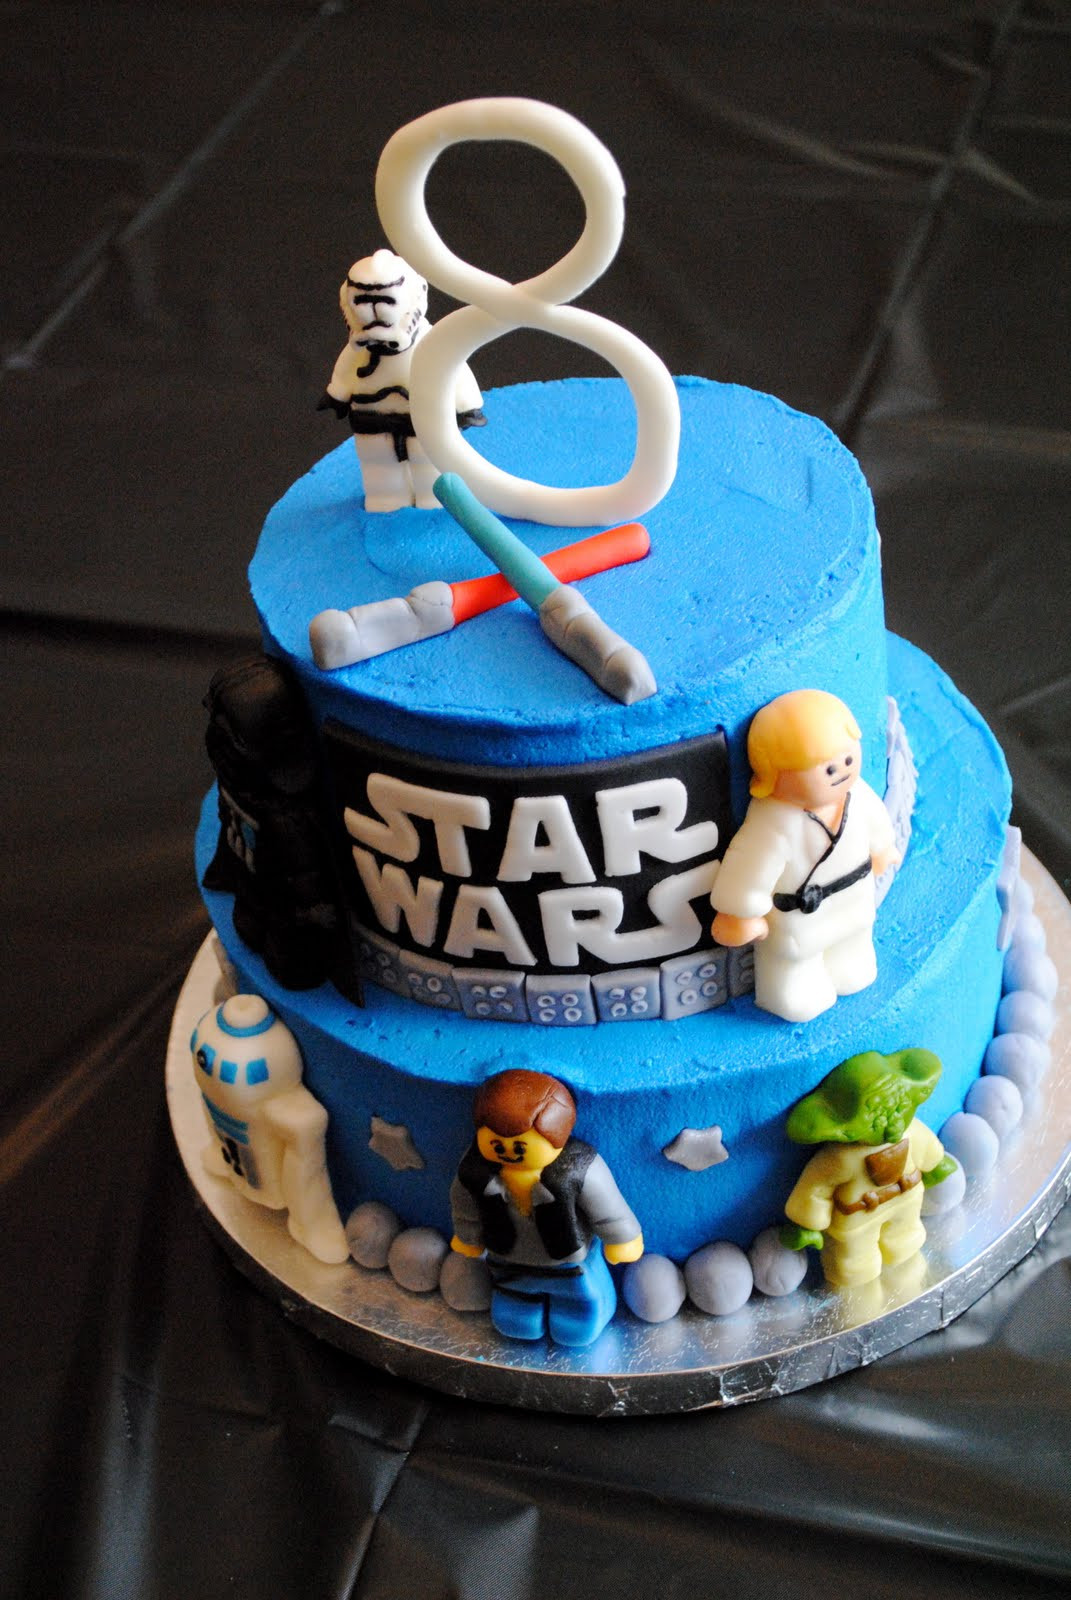 Star Wars Birthday Cake Ideas
 25 Star Wars themed Birthday Cakes